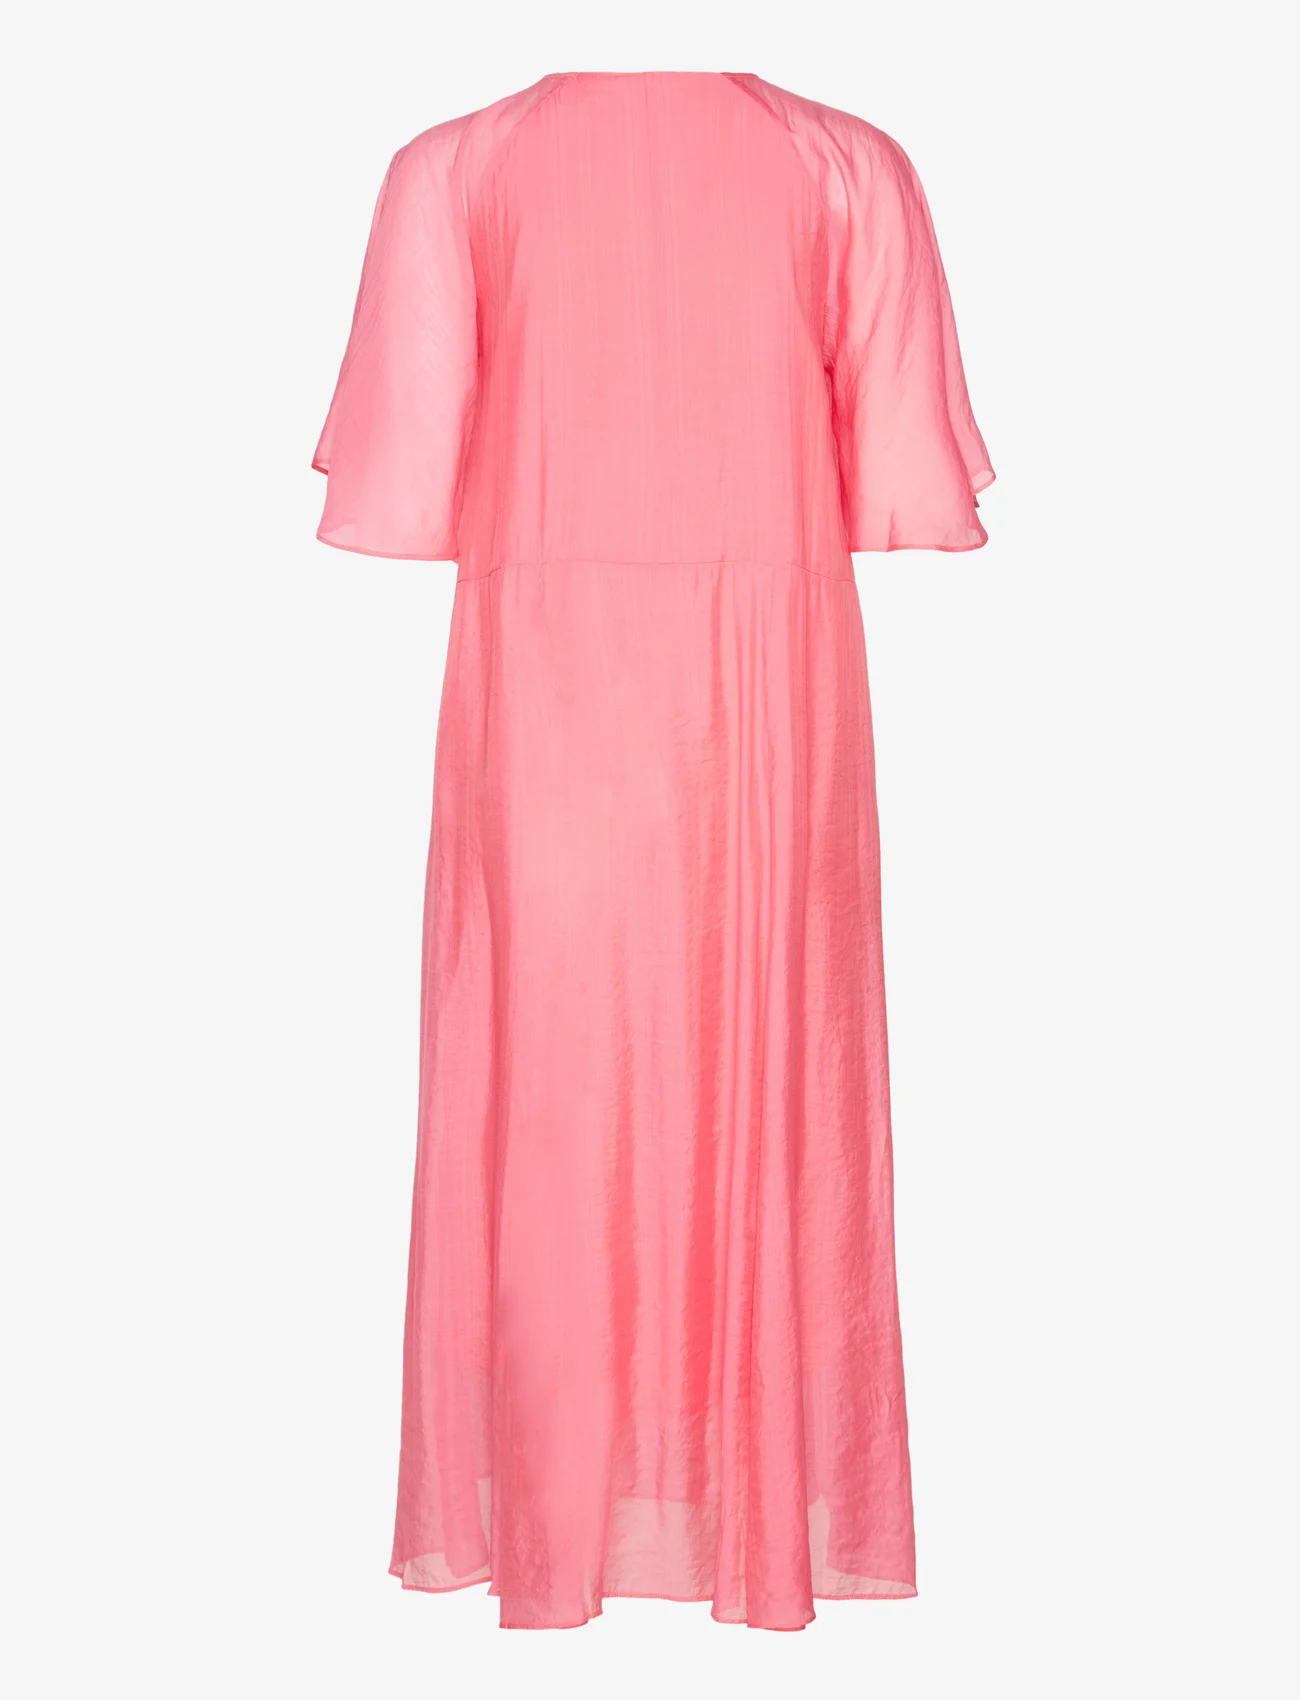 InWear - TriniIW Dress - sommerkjoler - pink rose - 1